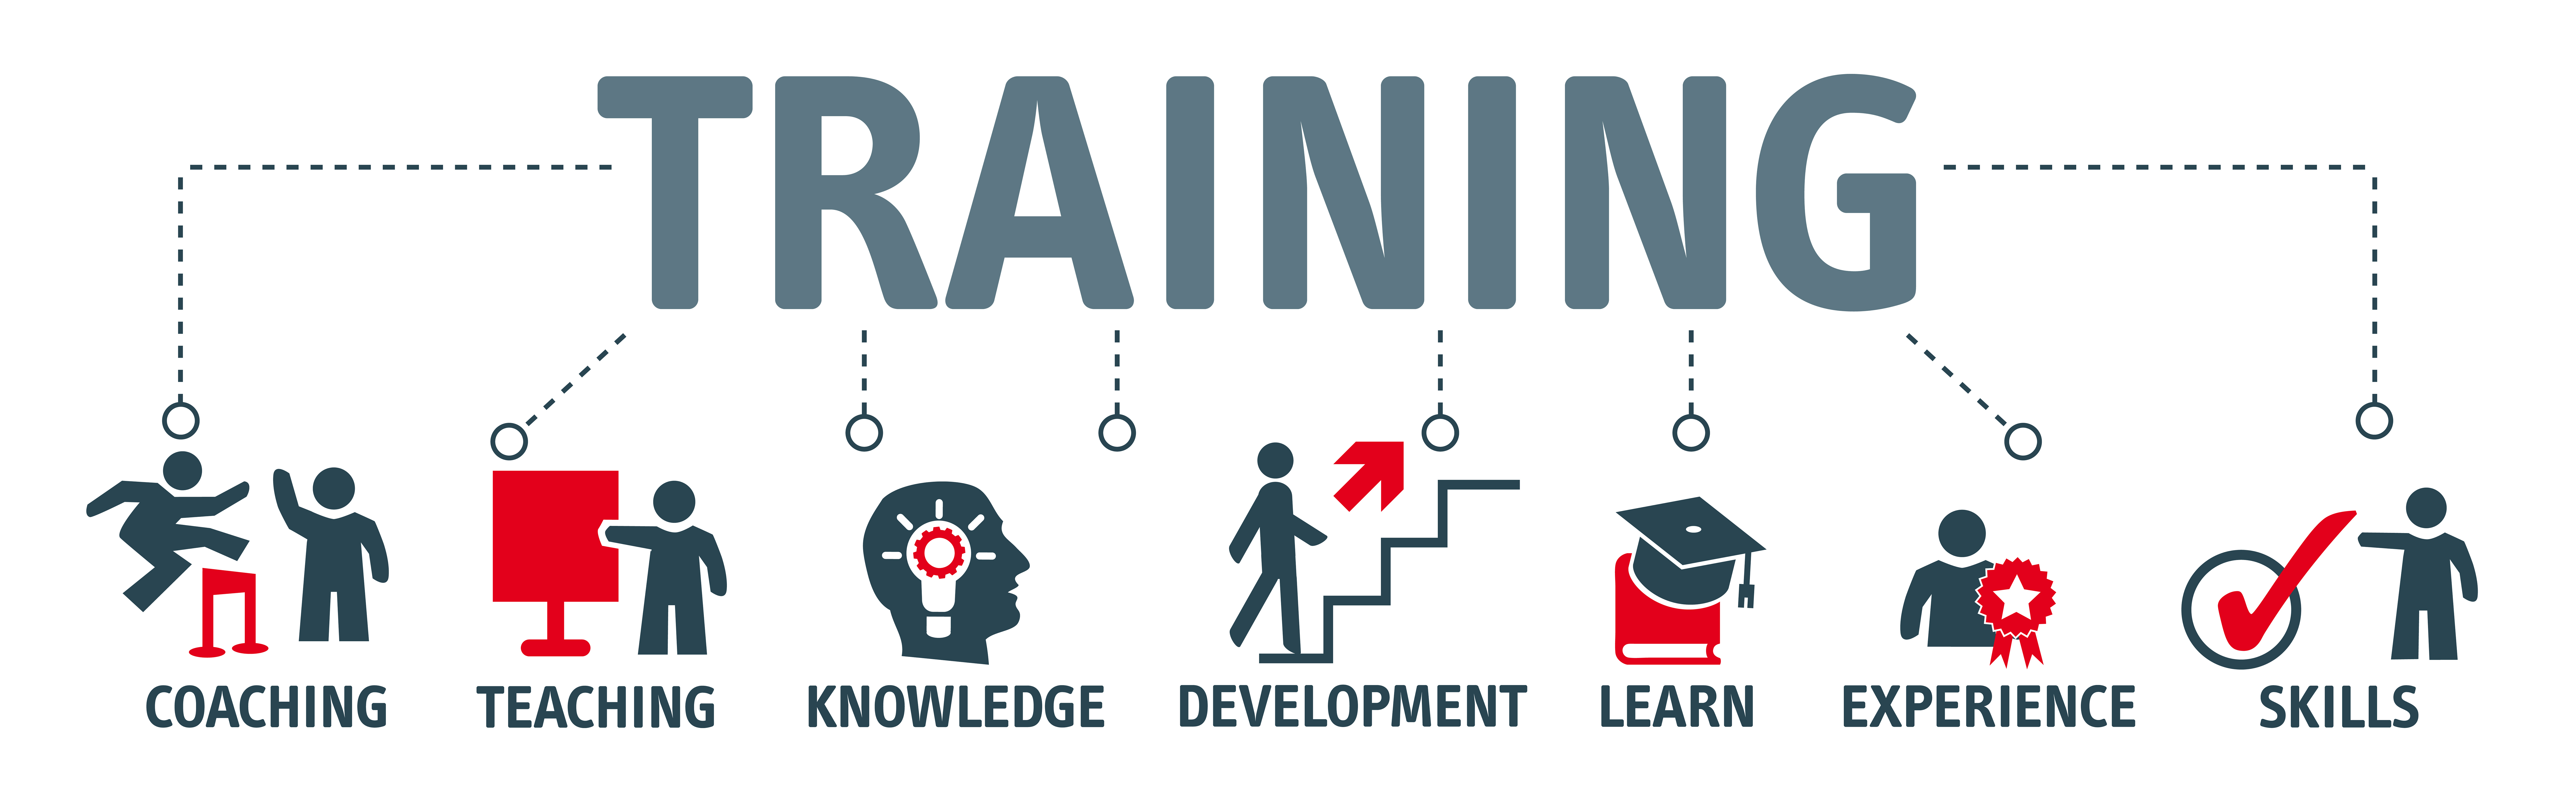 jobs education training